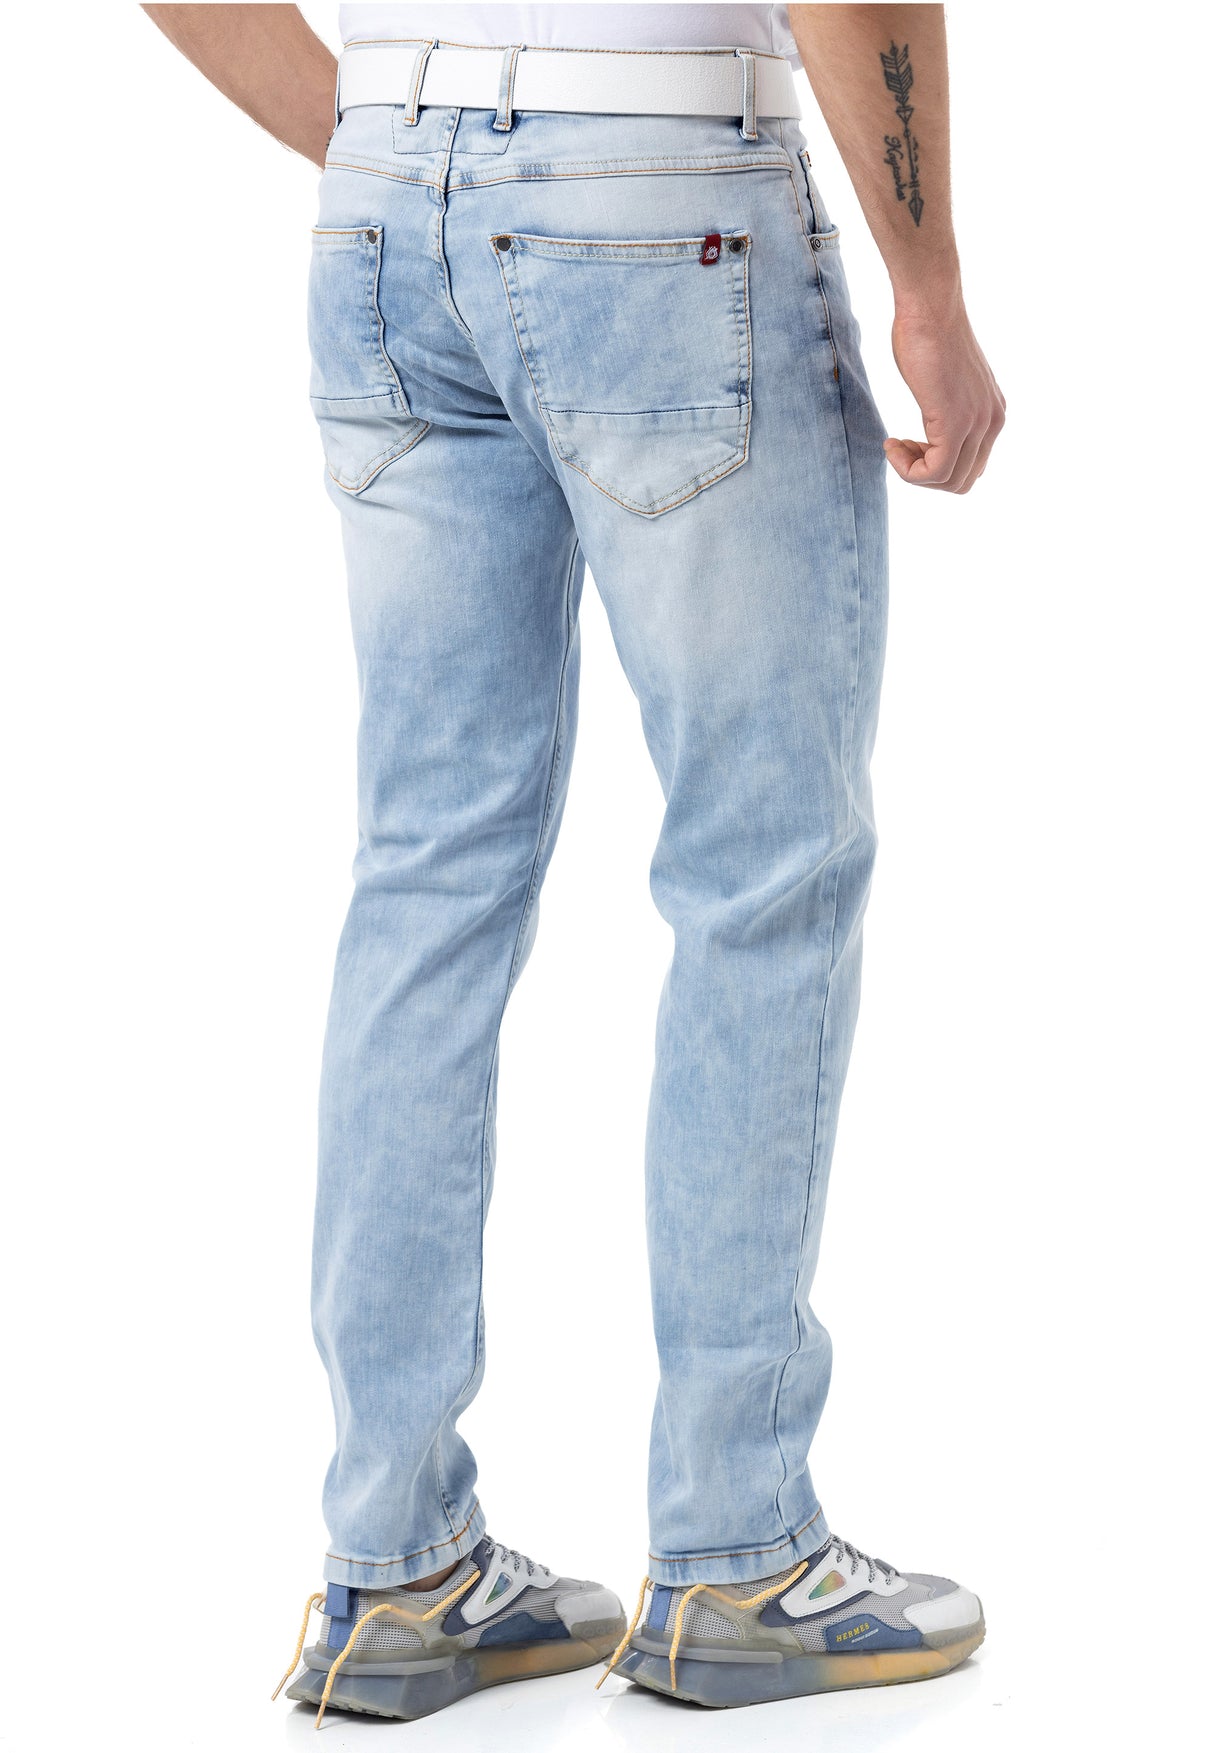 CD820 Jeans Slim Fit basico para hombre